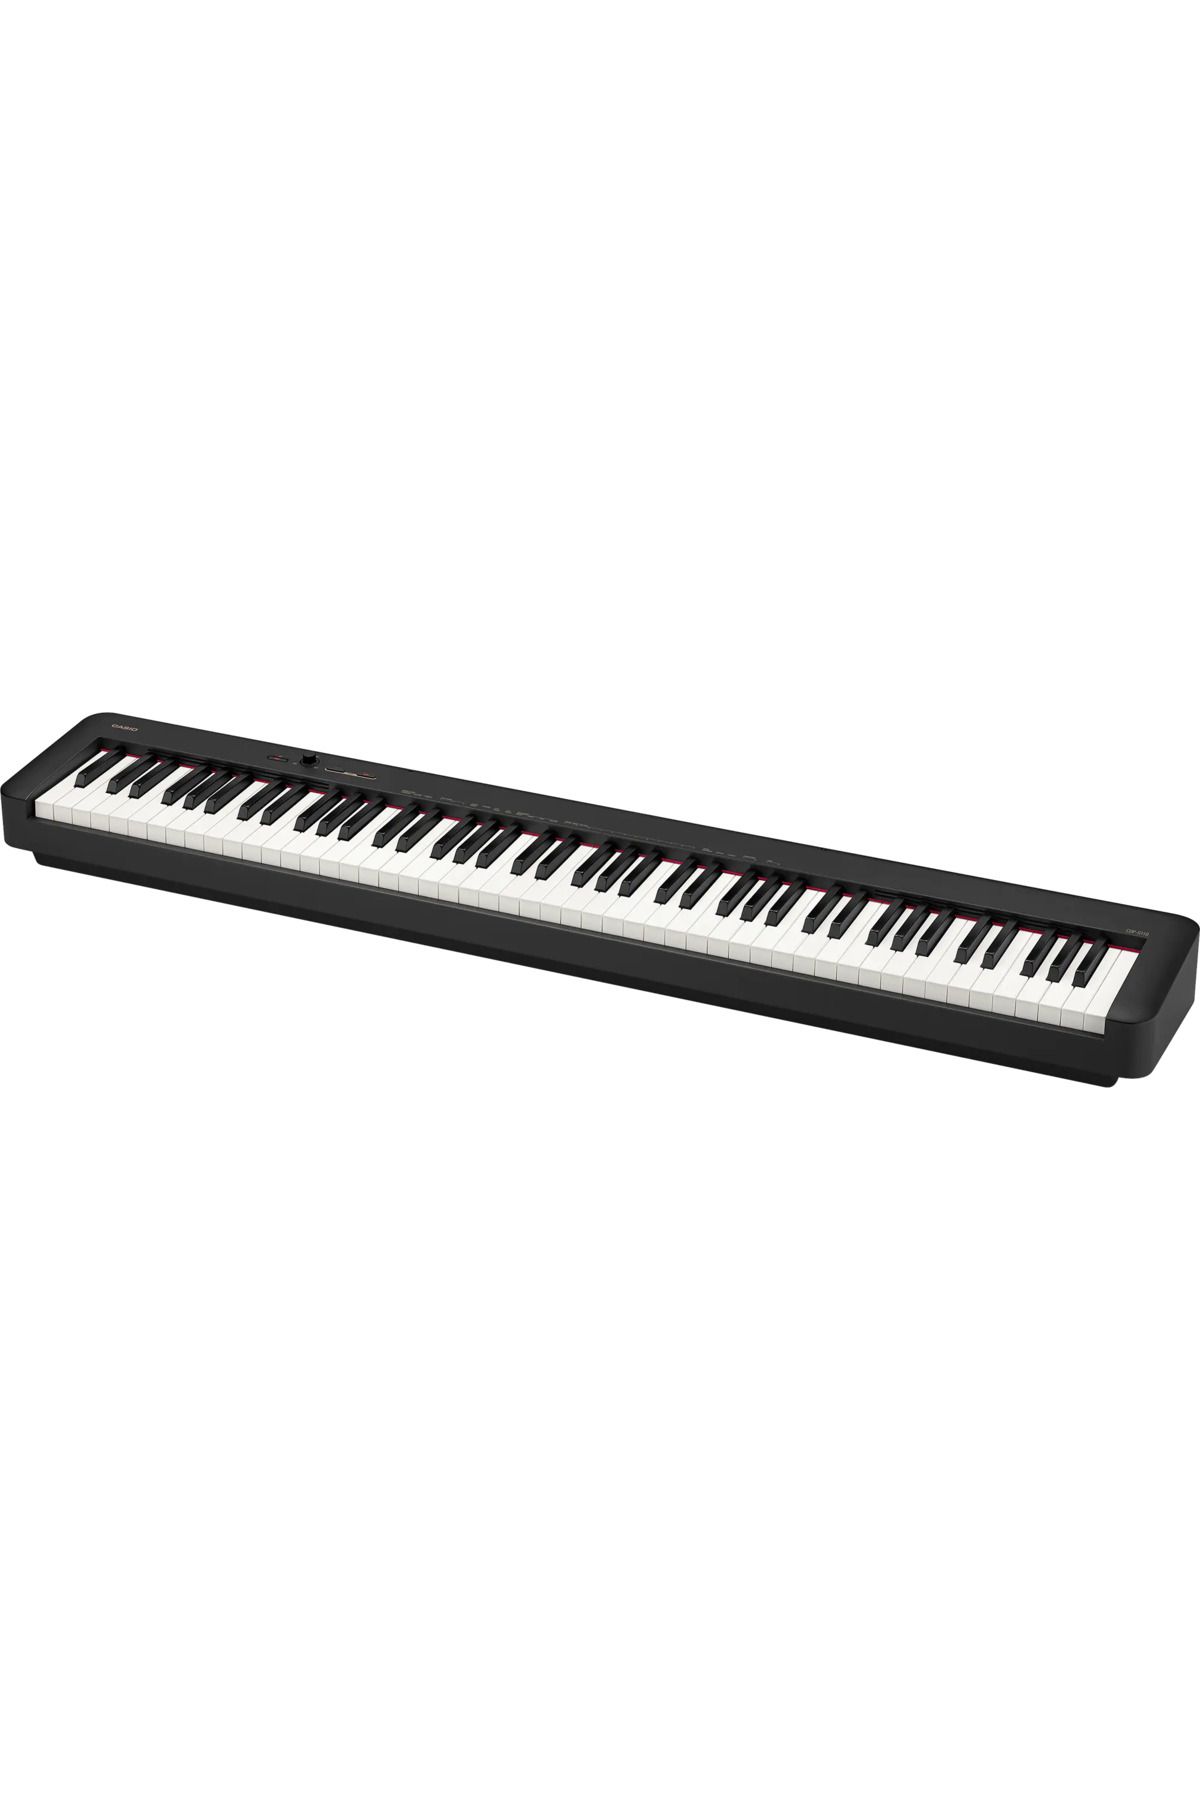 Casio Cdp-s110bkc2 Siyah Taşınabilir Dijital Piyano